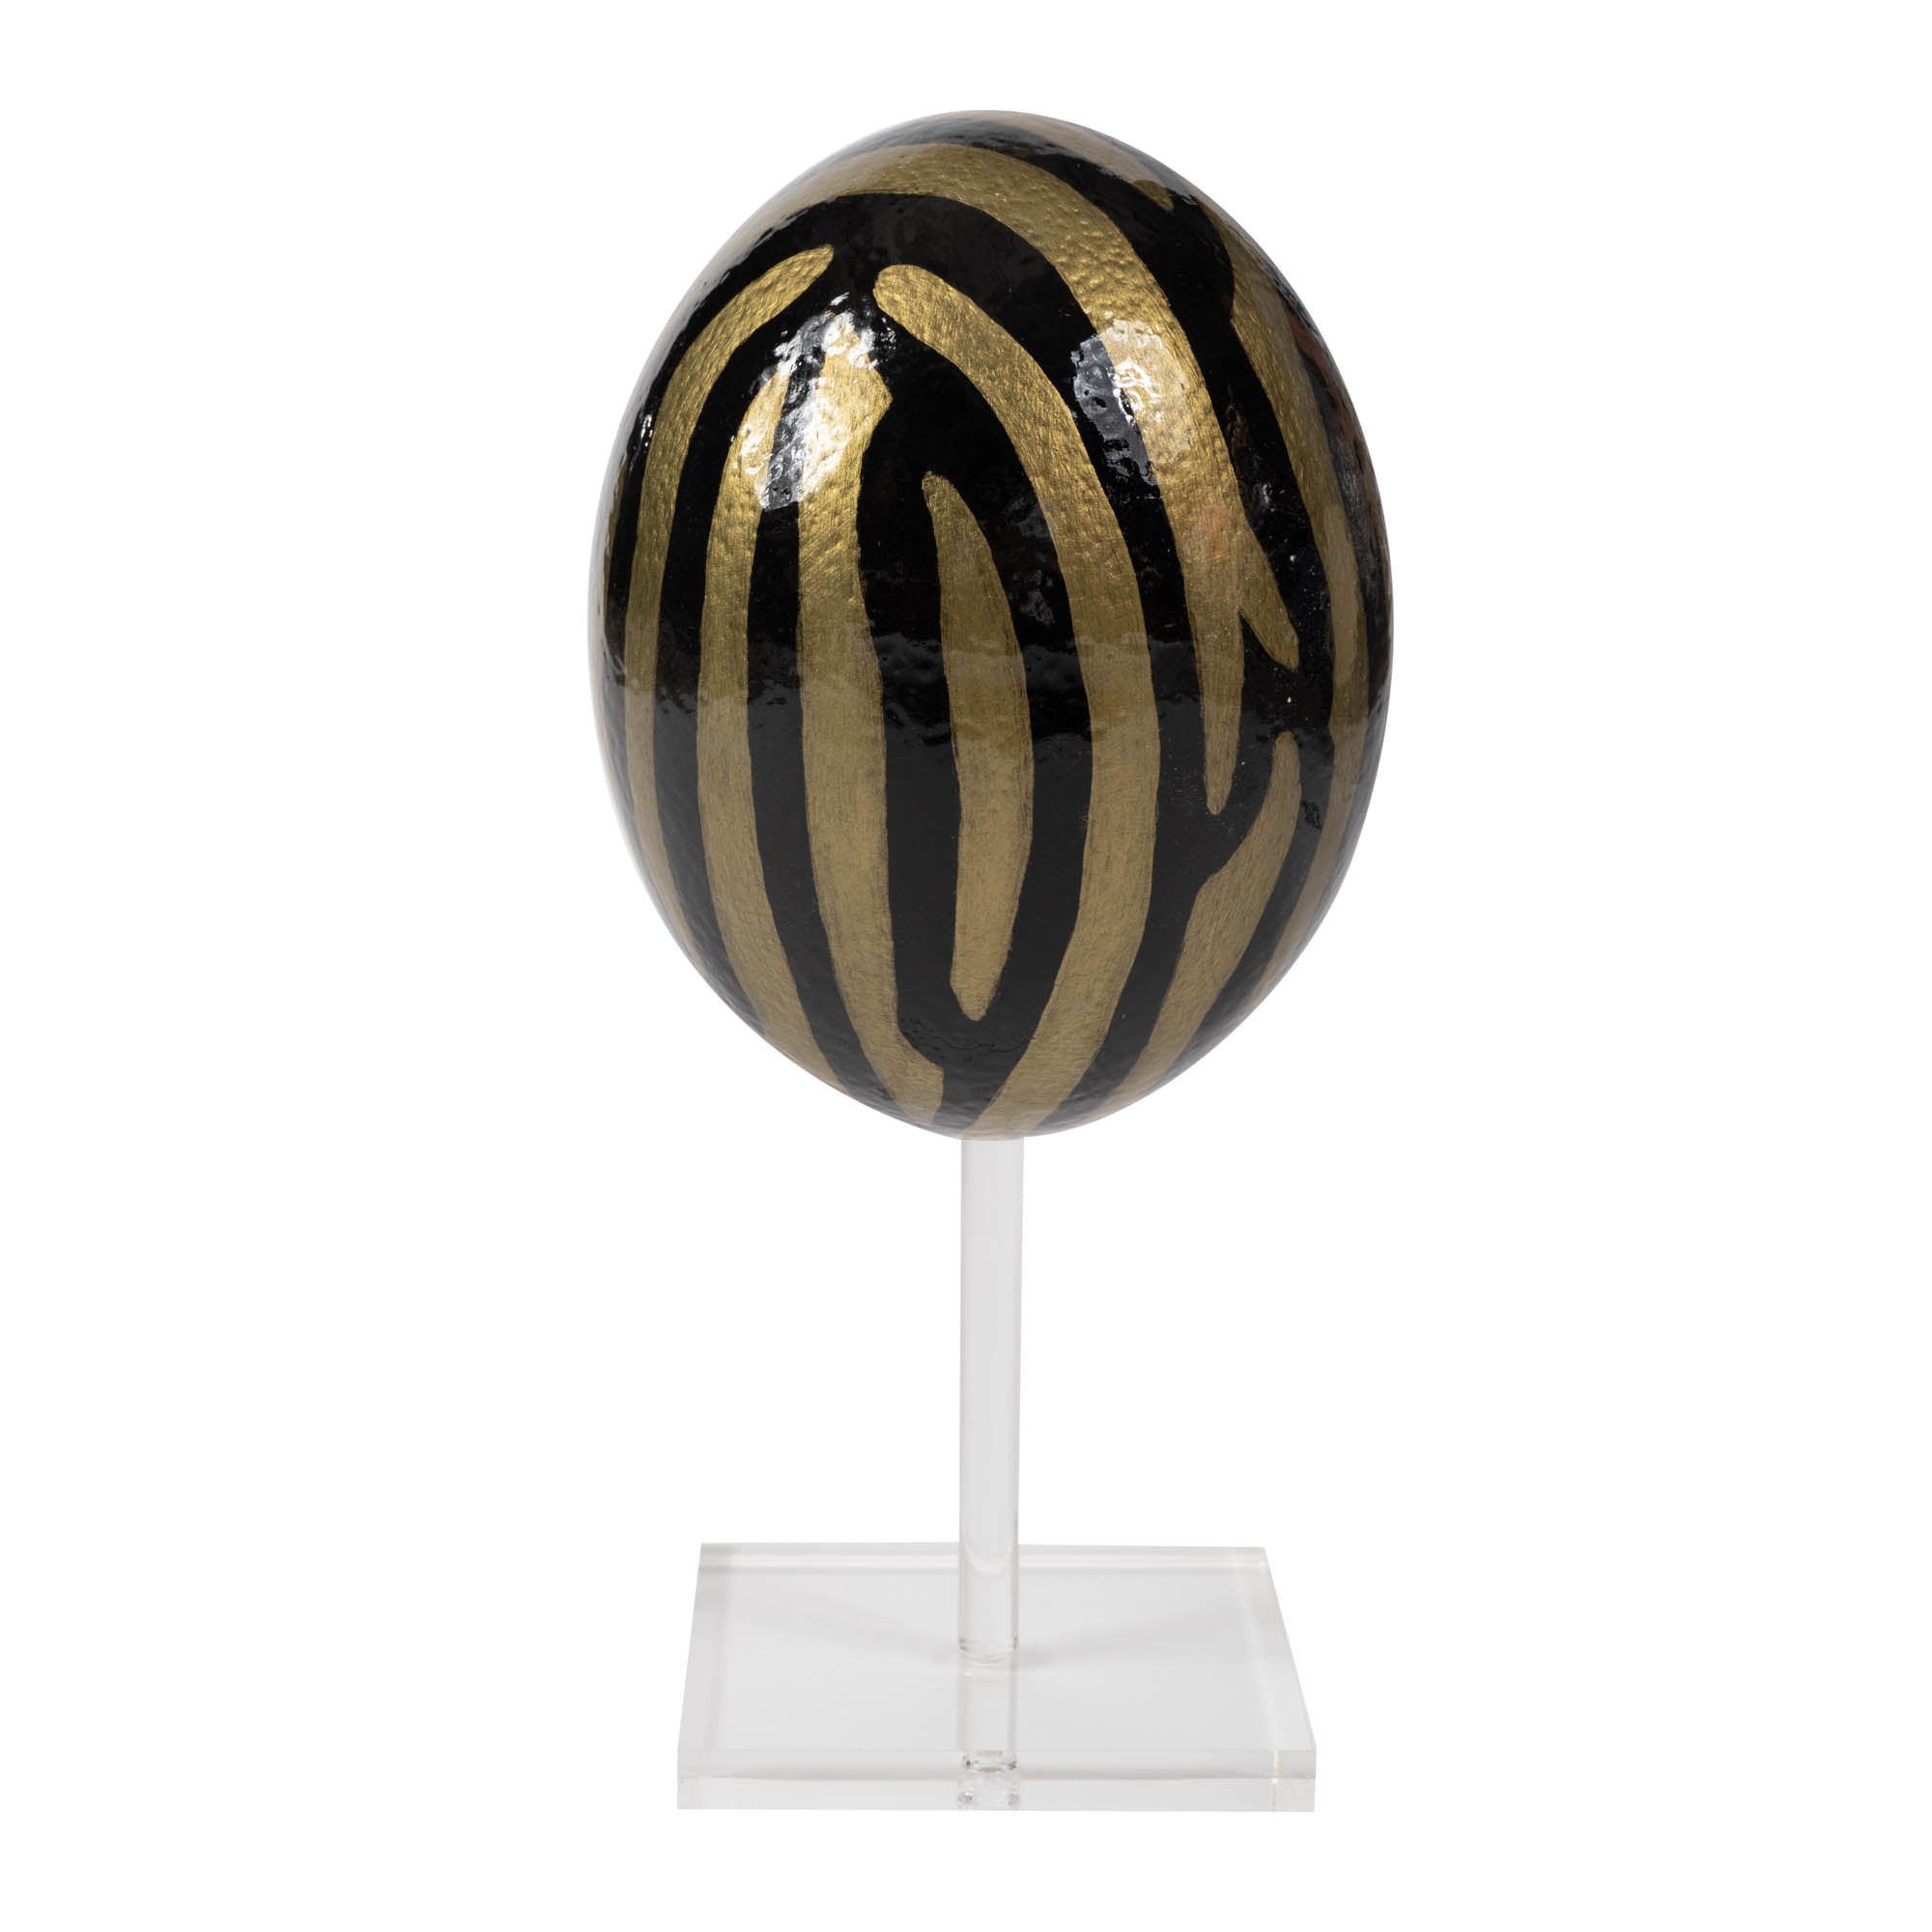 Painted Ostrich Egg - Black & Gold Zebra Stripe